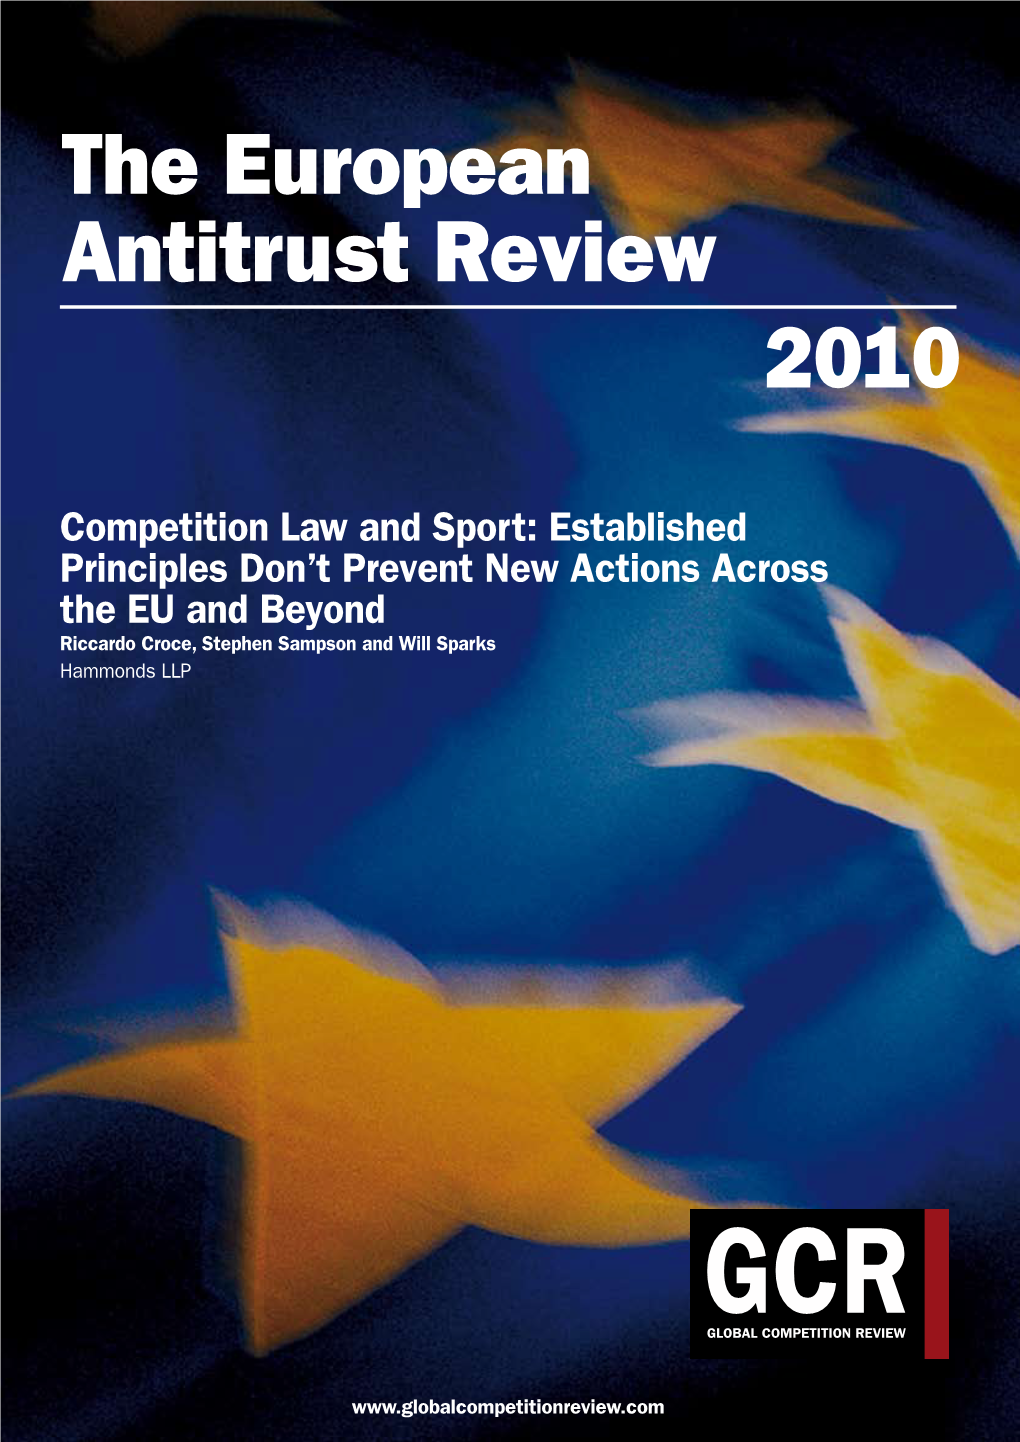 The European Antitrust Review 2010